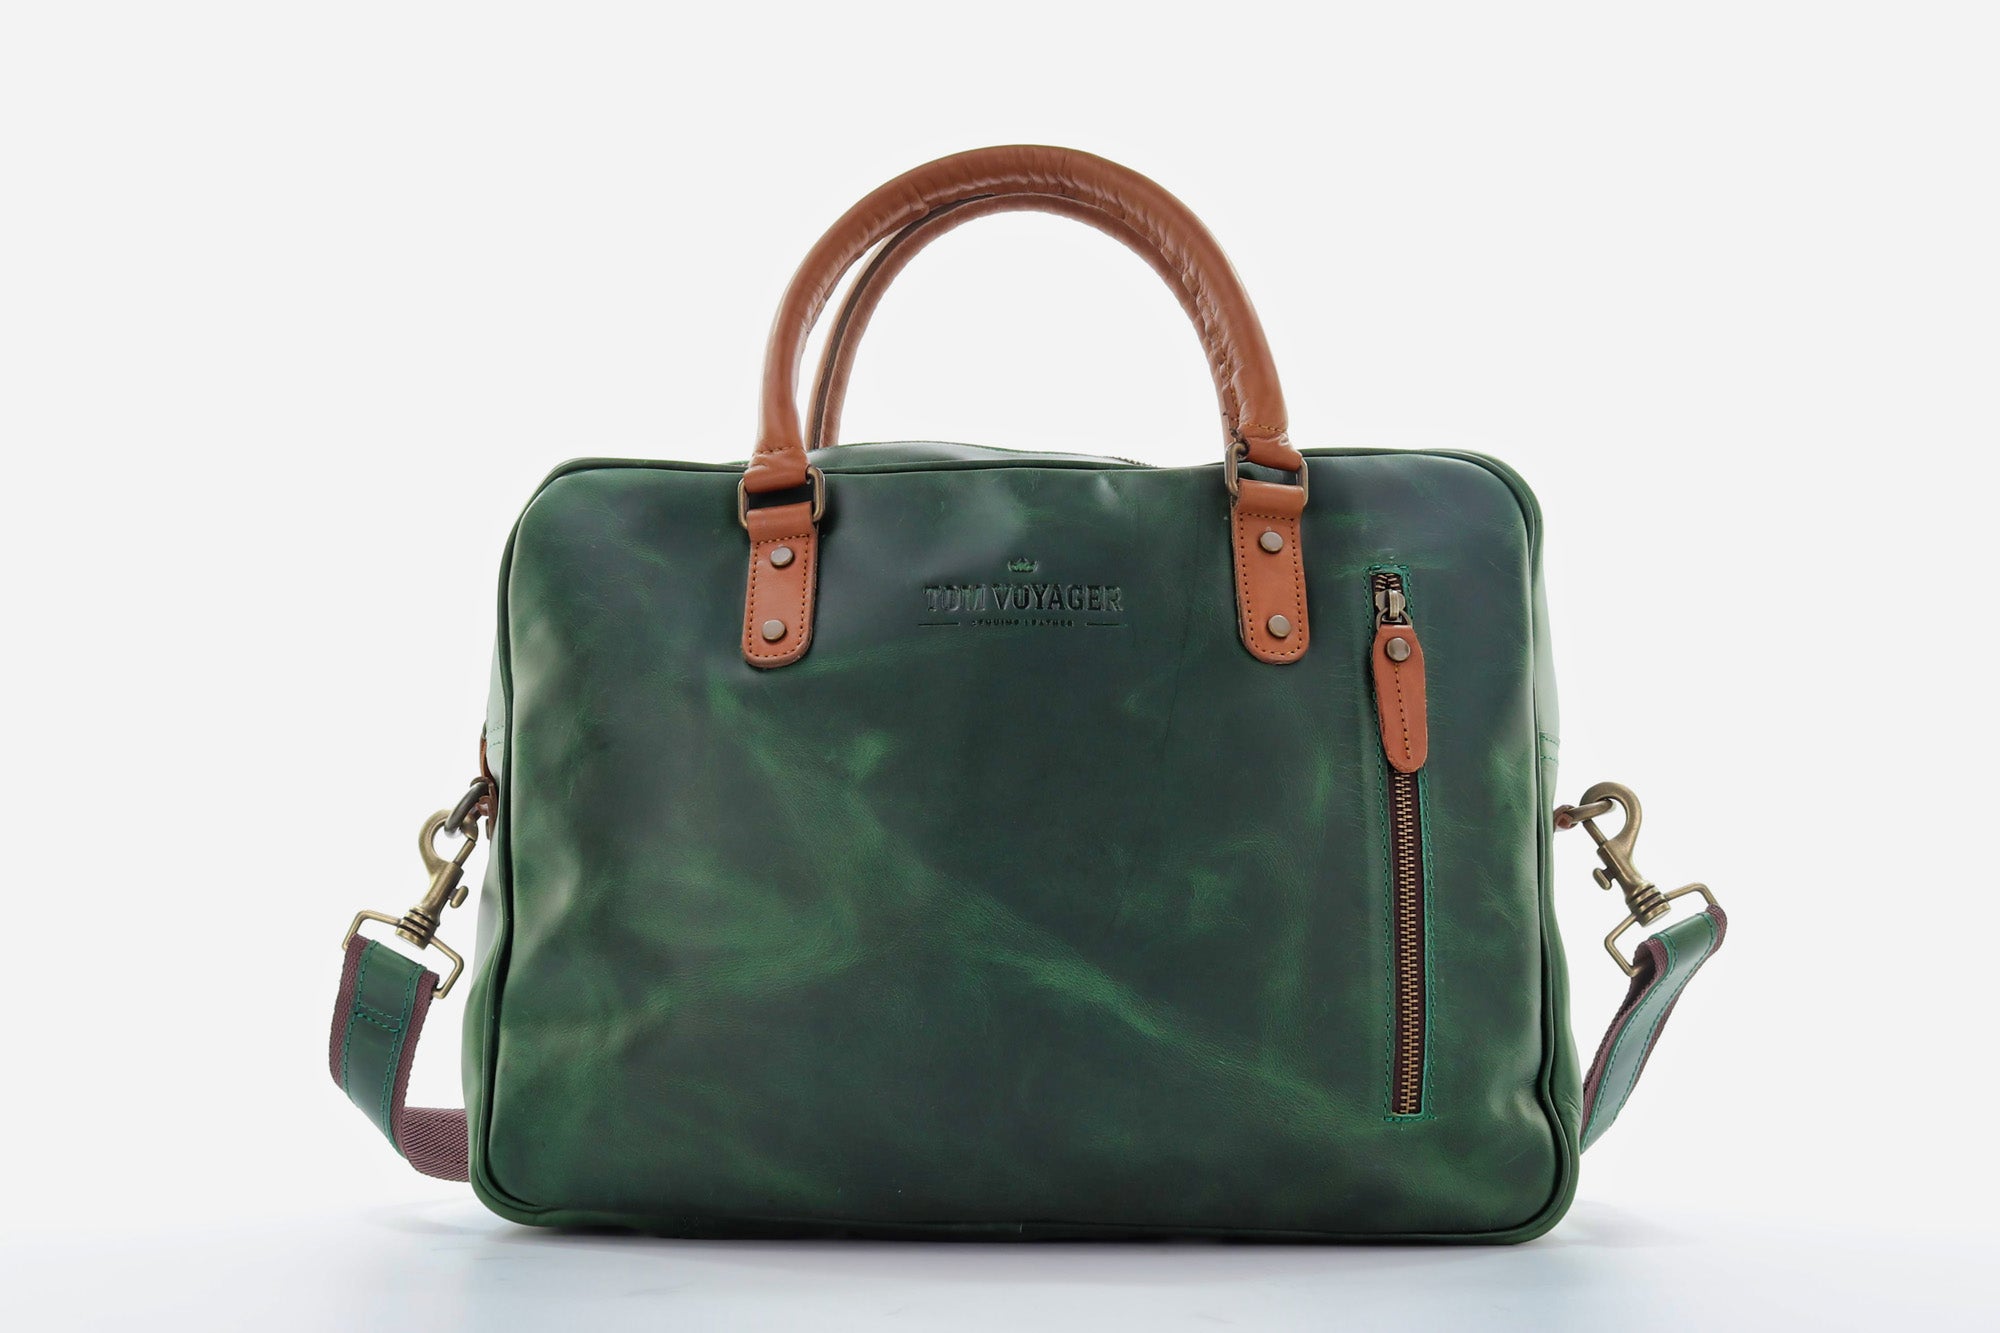 Emerald leather bag - genuine leather bag - messenger bag - emerald green - front view